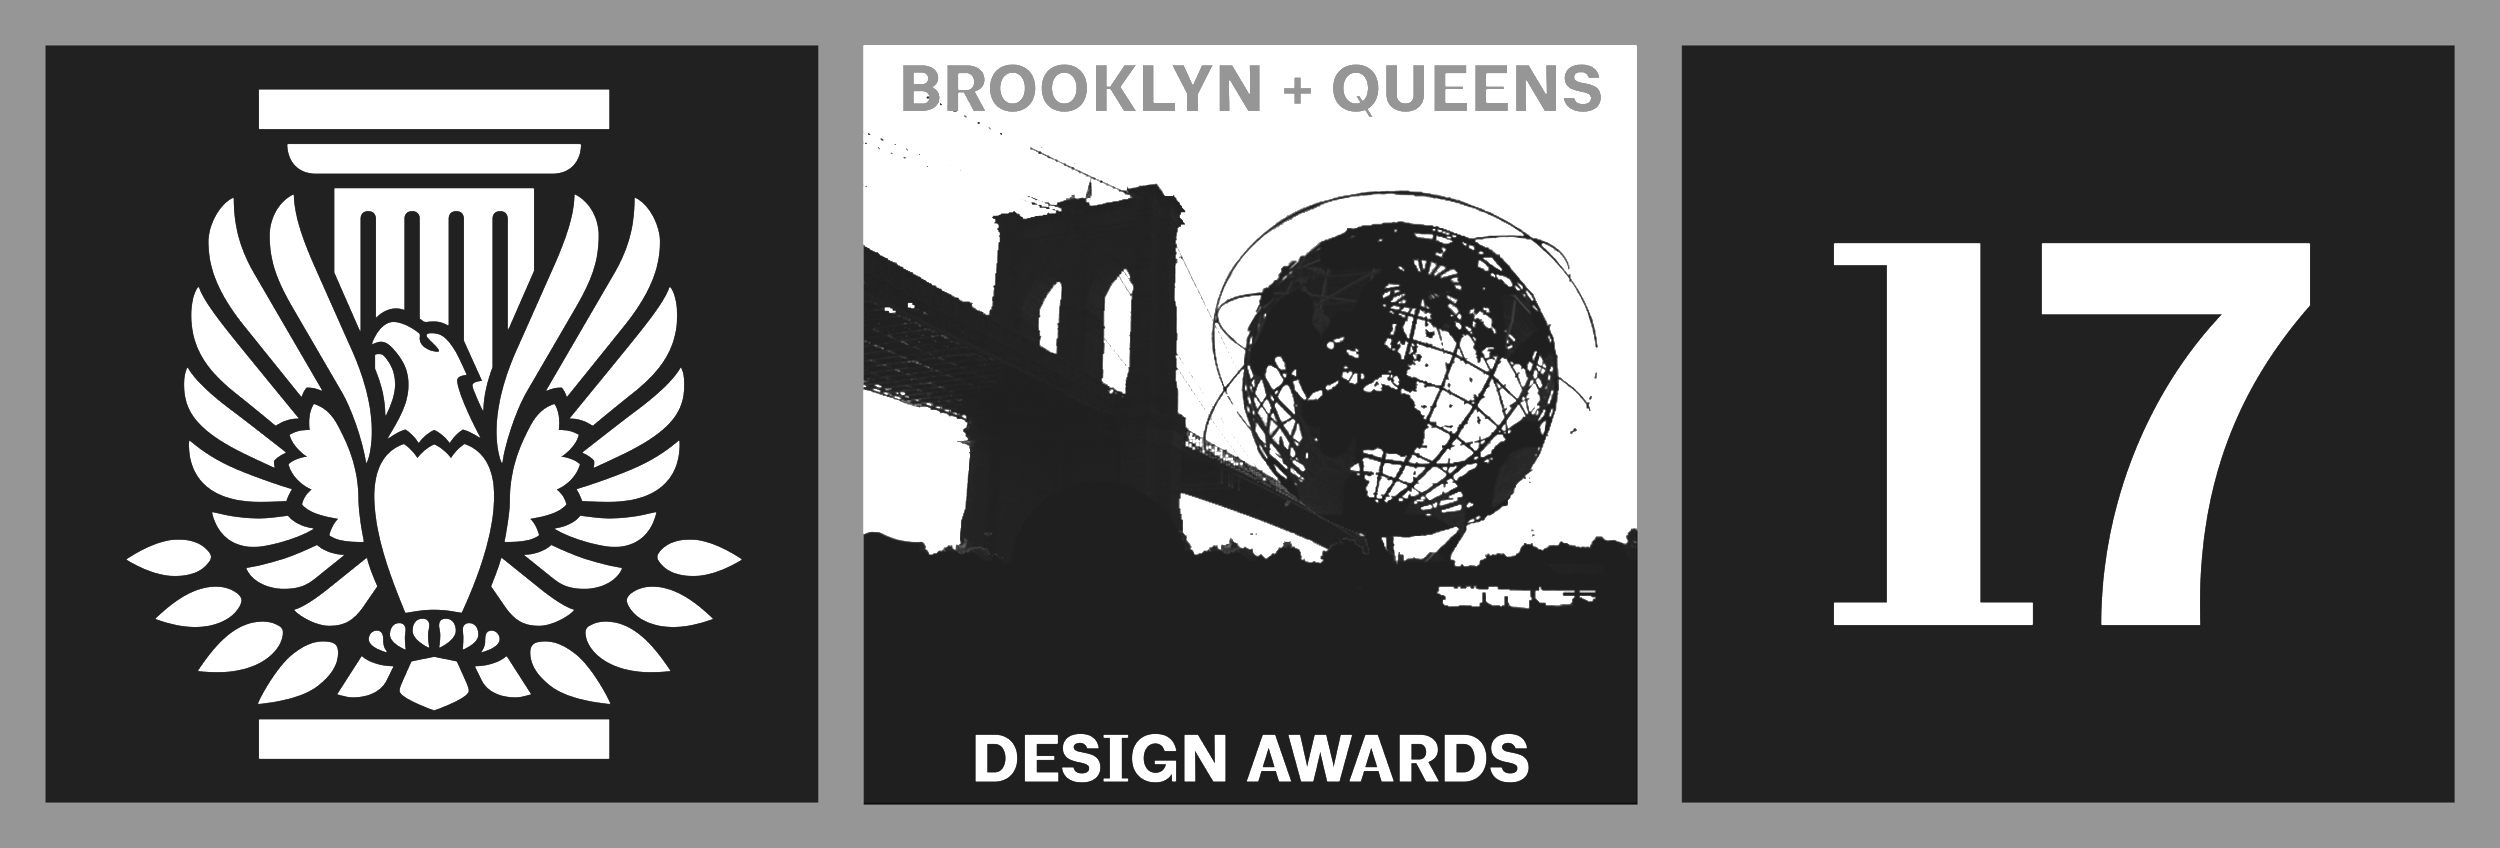 AIA Brooklyn Queens Design Awards 17.png